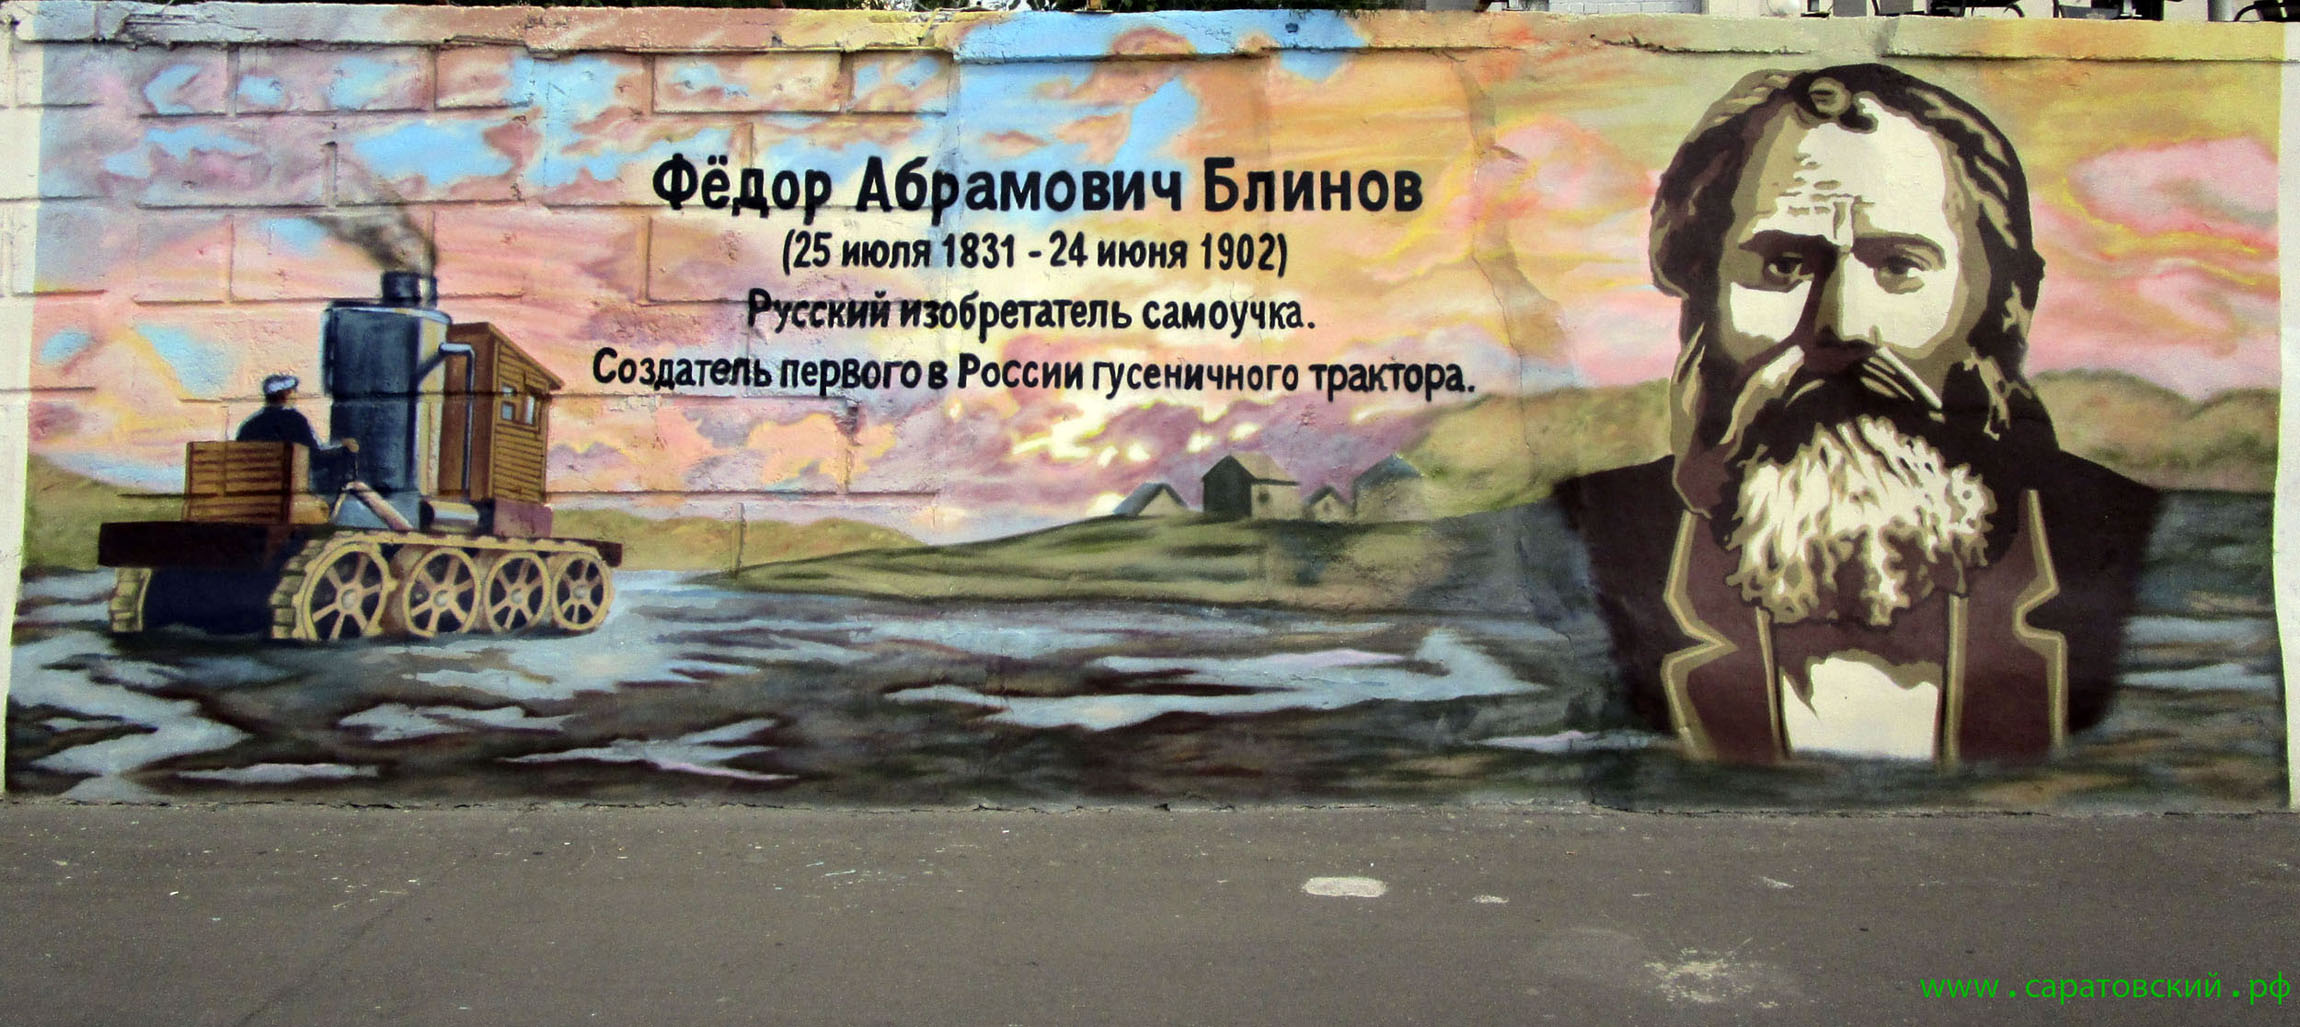 Saratov waterfront graffiti: Fyodor Blinov and Saratov, Russia